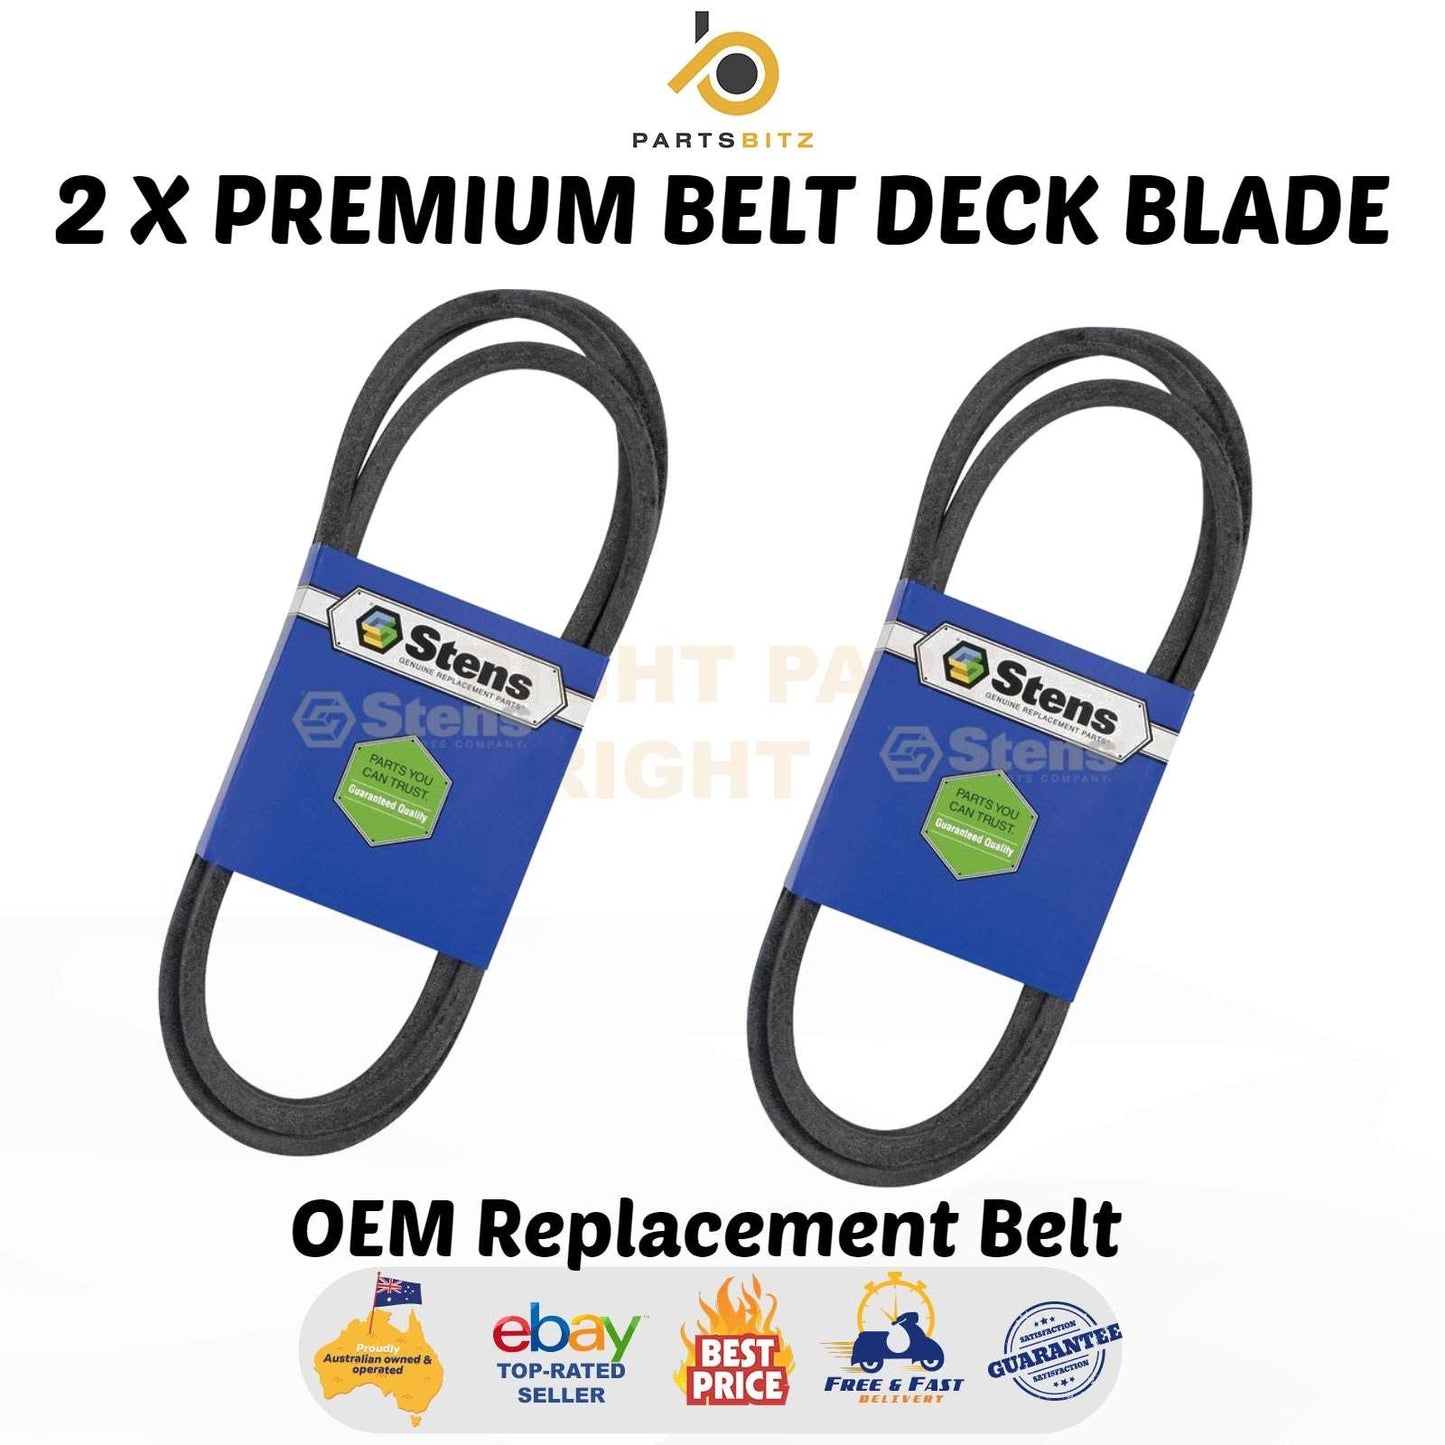 2 X Premium Deck Belt for 42" Cut John Deere & Sabre Mowers GX20072 GY20570